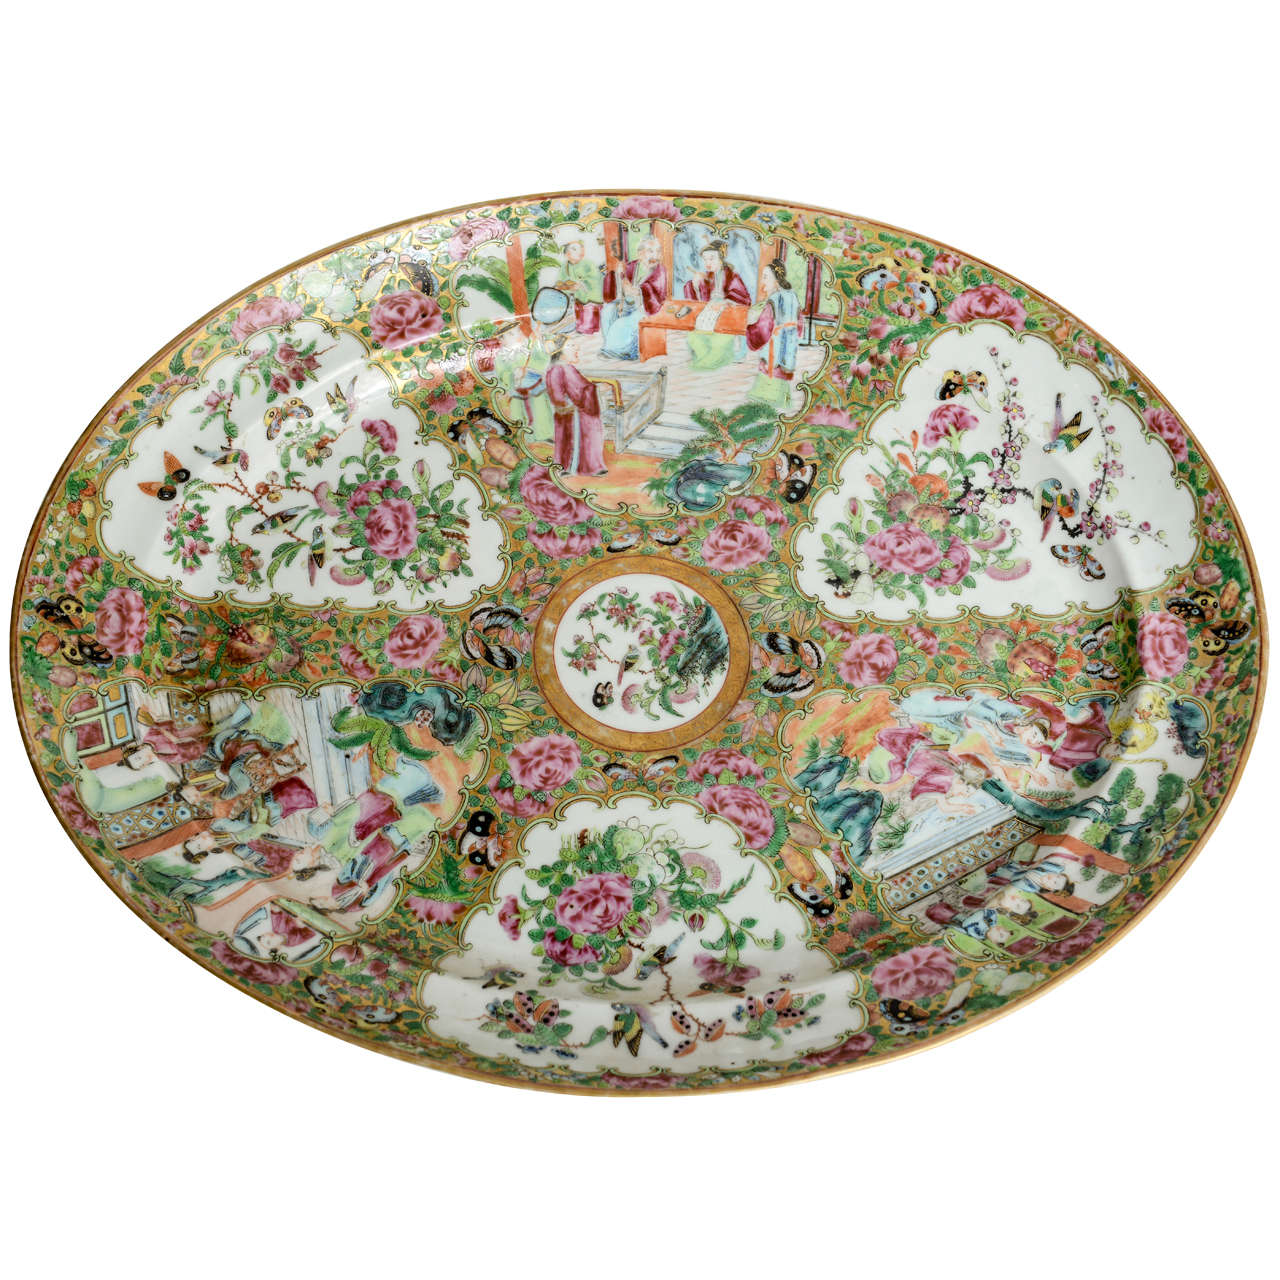 Huge Chinese Porcelain Famille Rose Oval Platter, 19th century